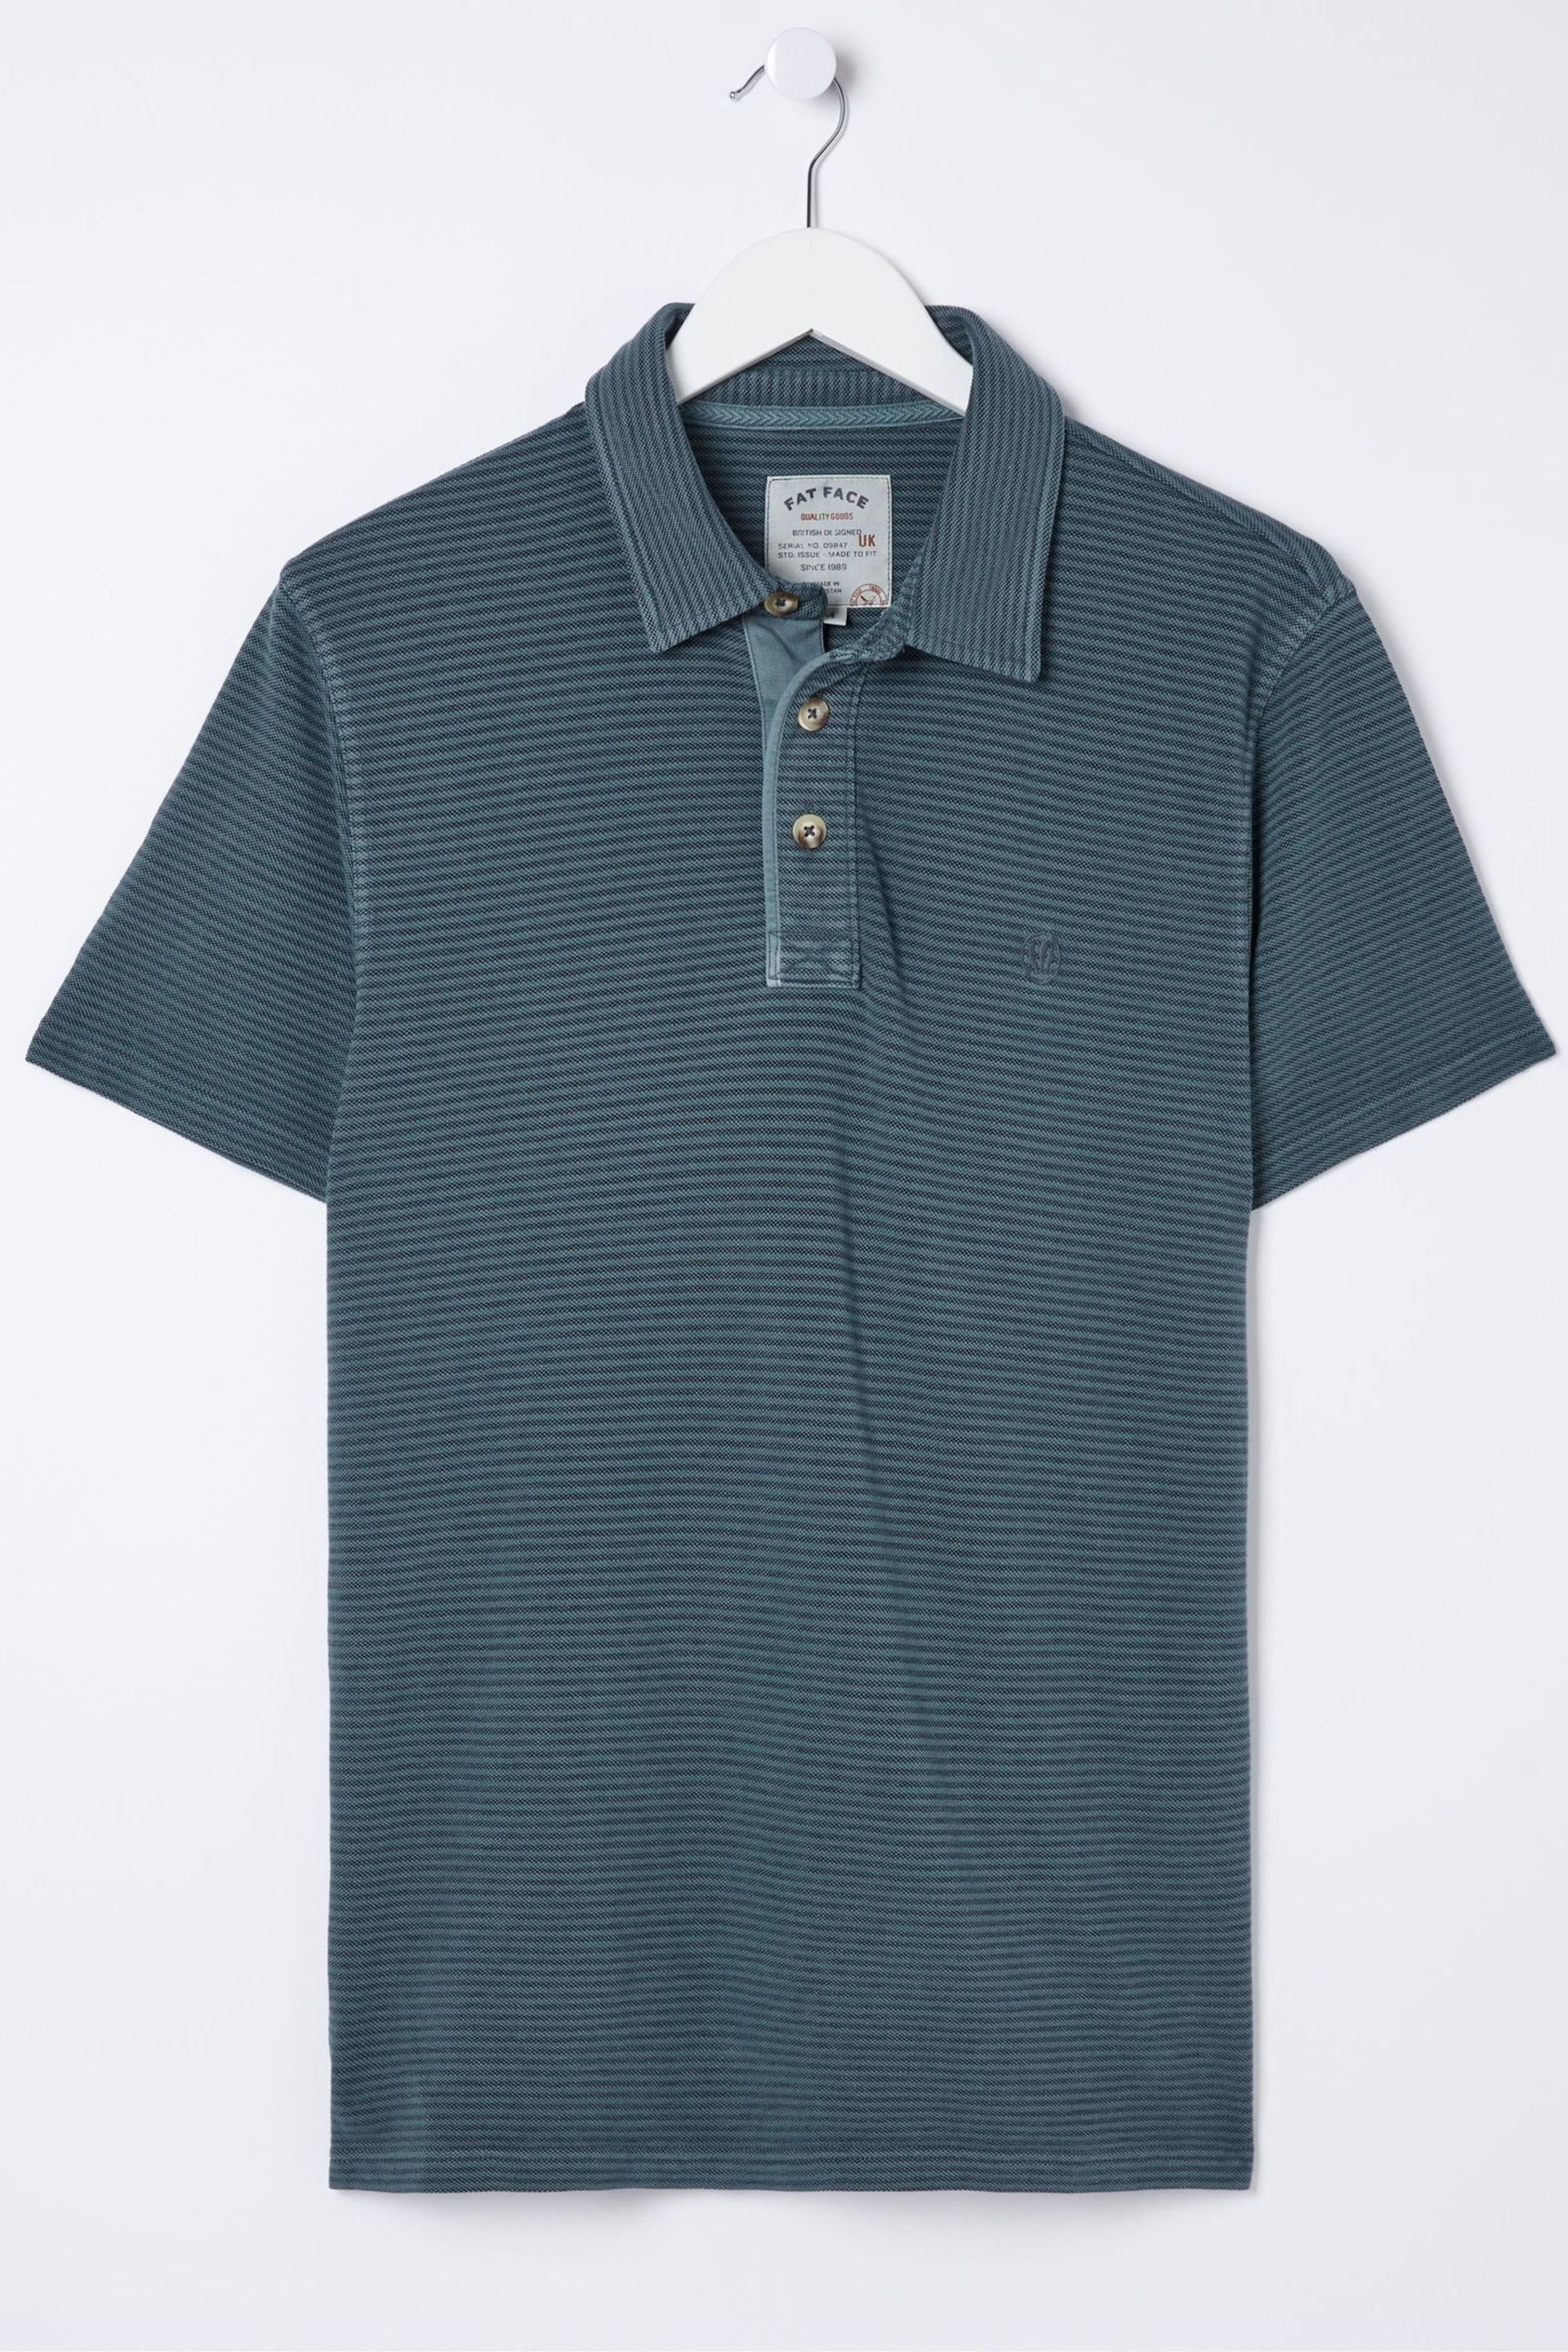 FatFace Blue Fine Stripe Polo Shirt - Image 5 of 5